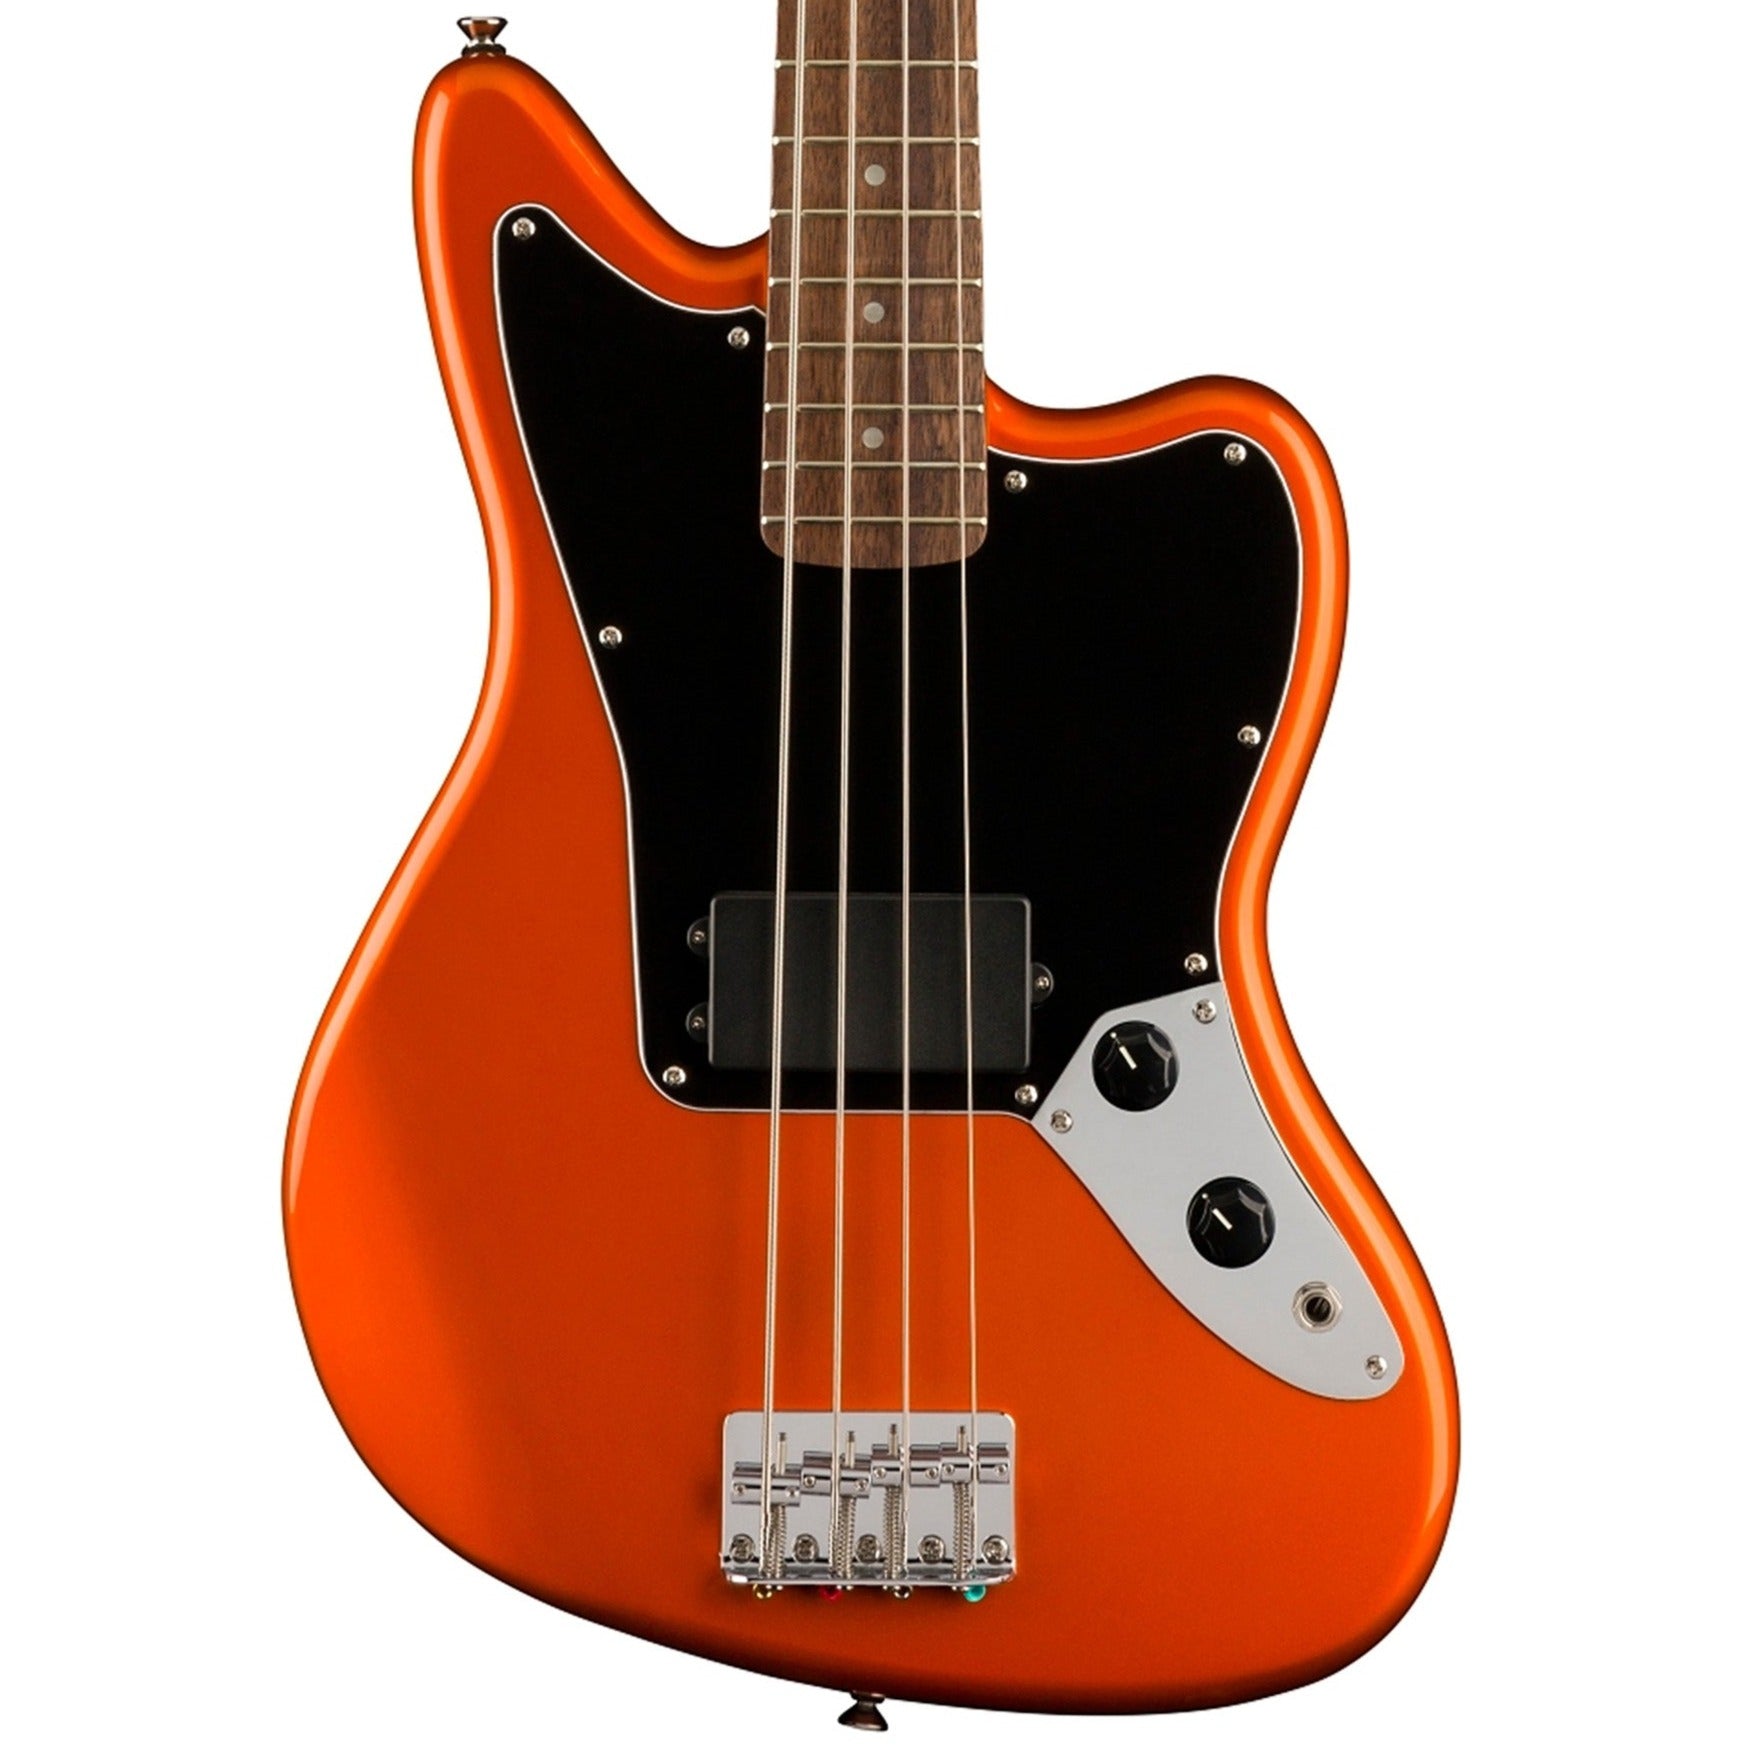 Squier Affinity Series Jag Bass H Guitar, Laurel FB, Metallic Orange | Zoso Music Sdn Bhd